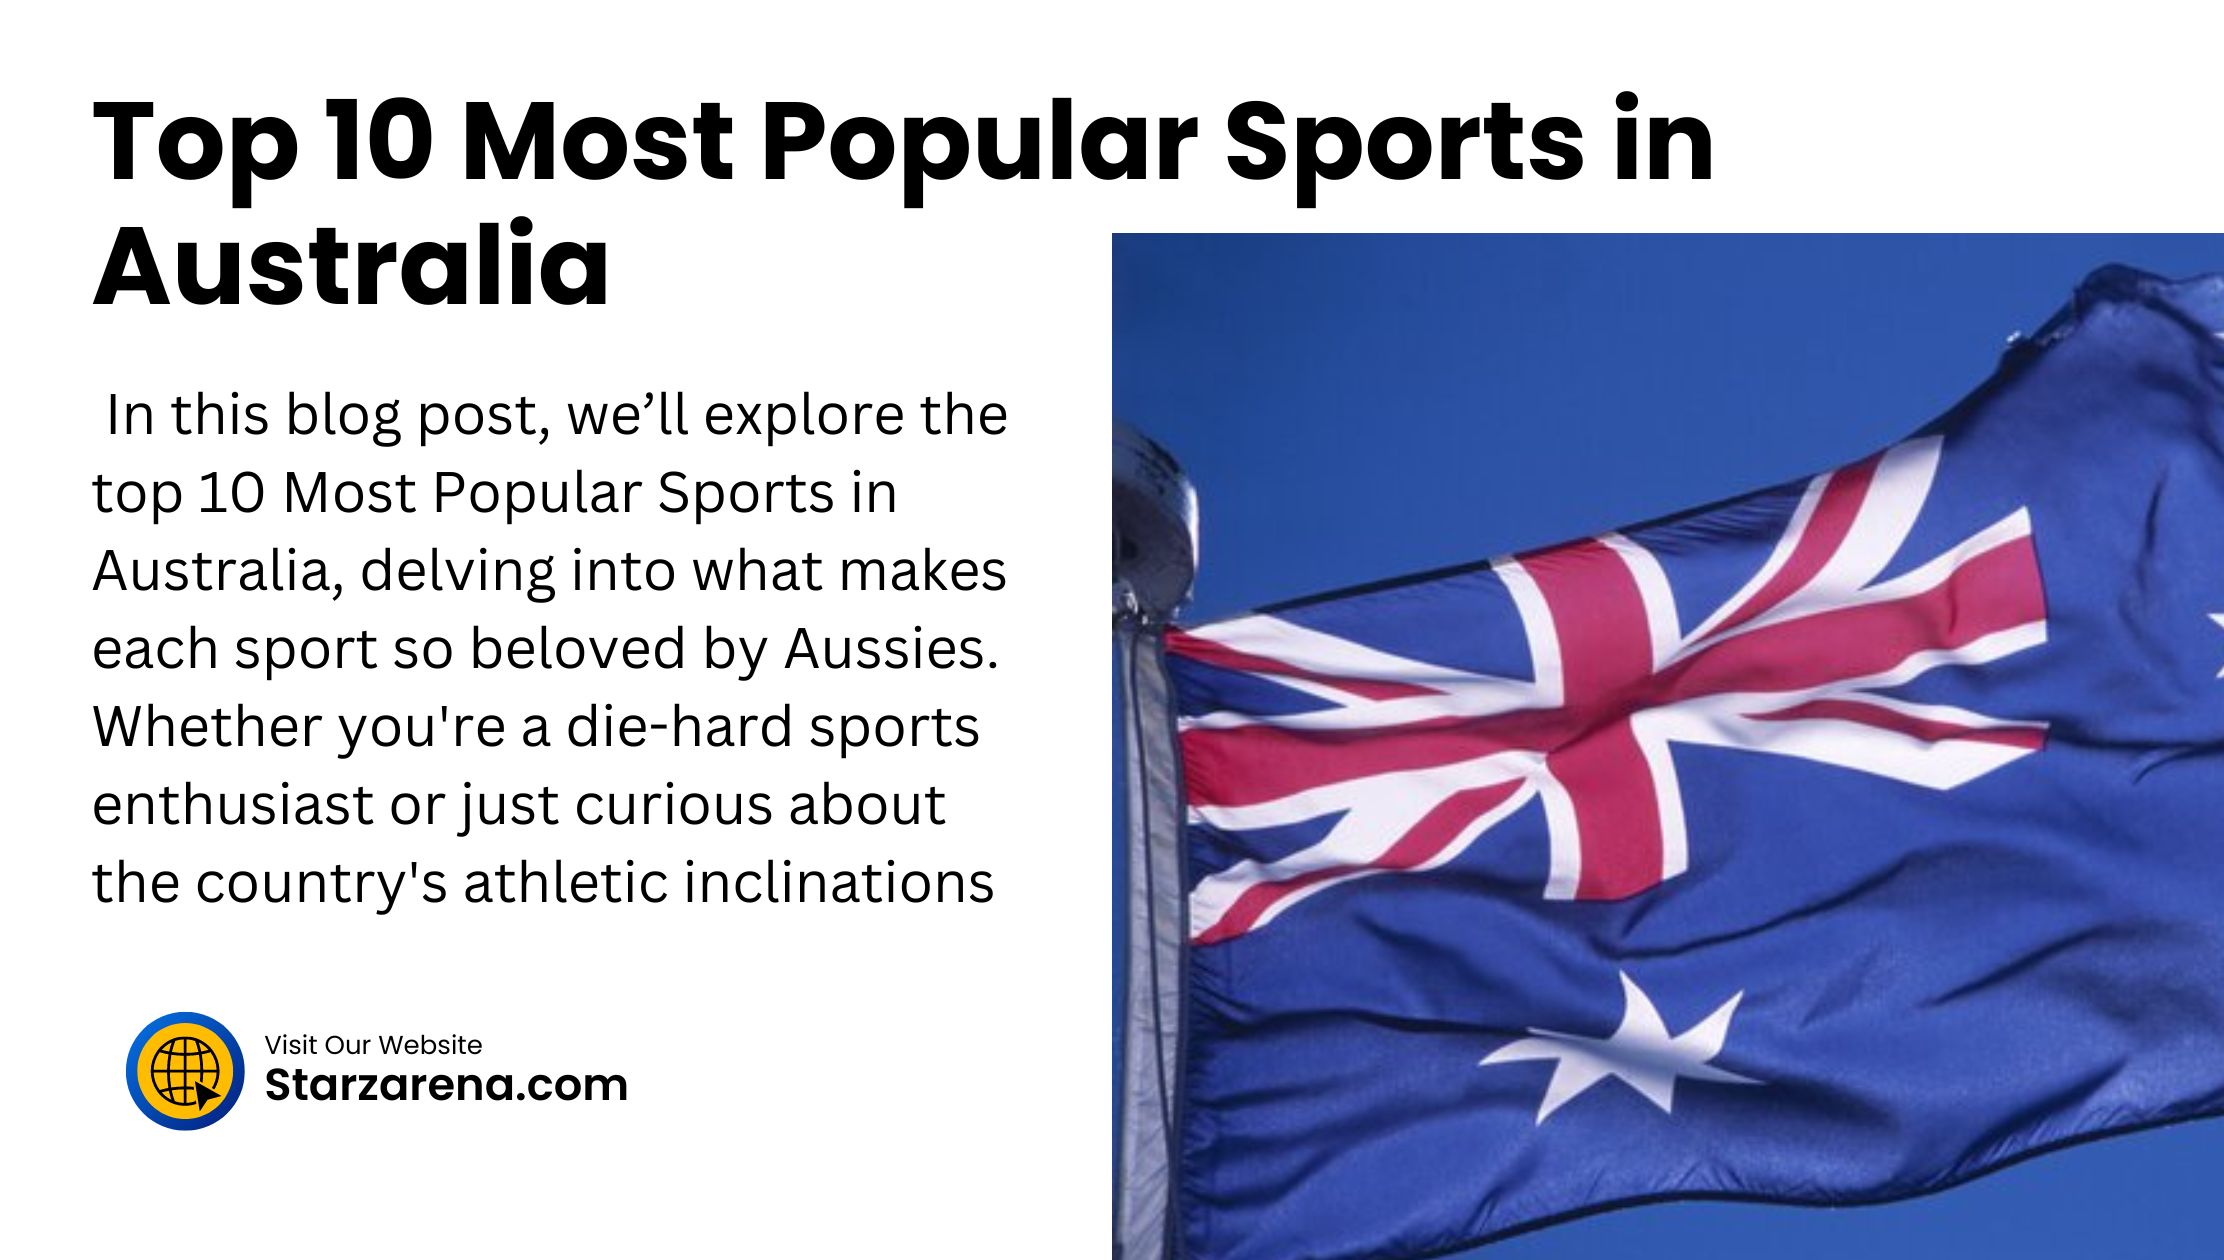 Top 10 Most Popular Sports in Australia